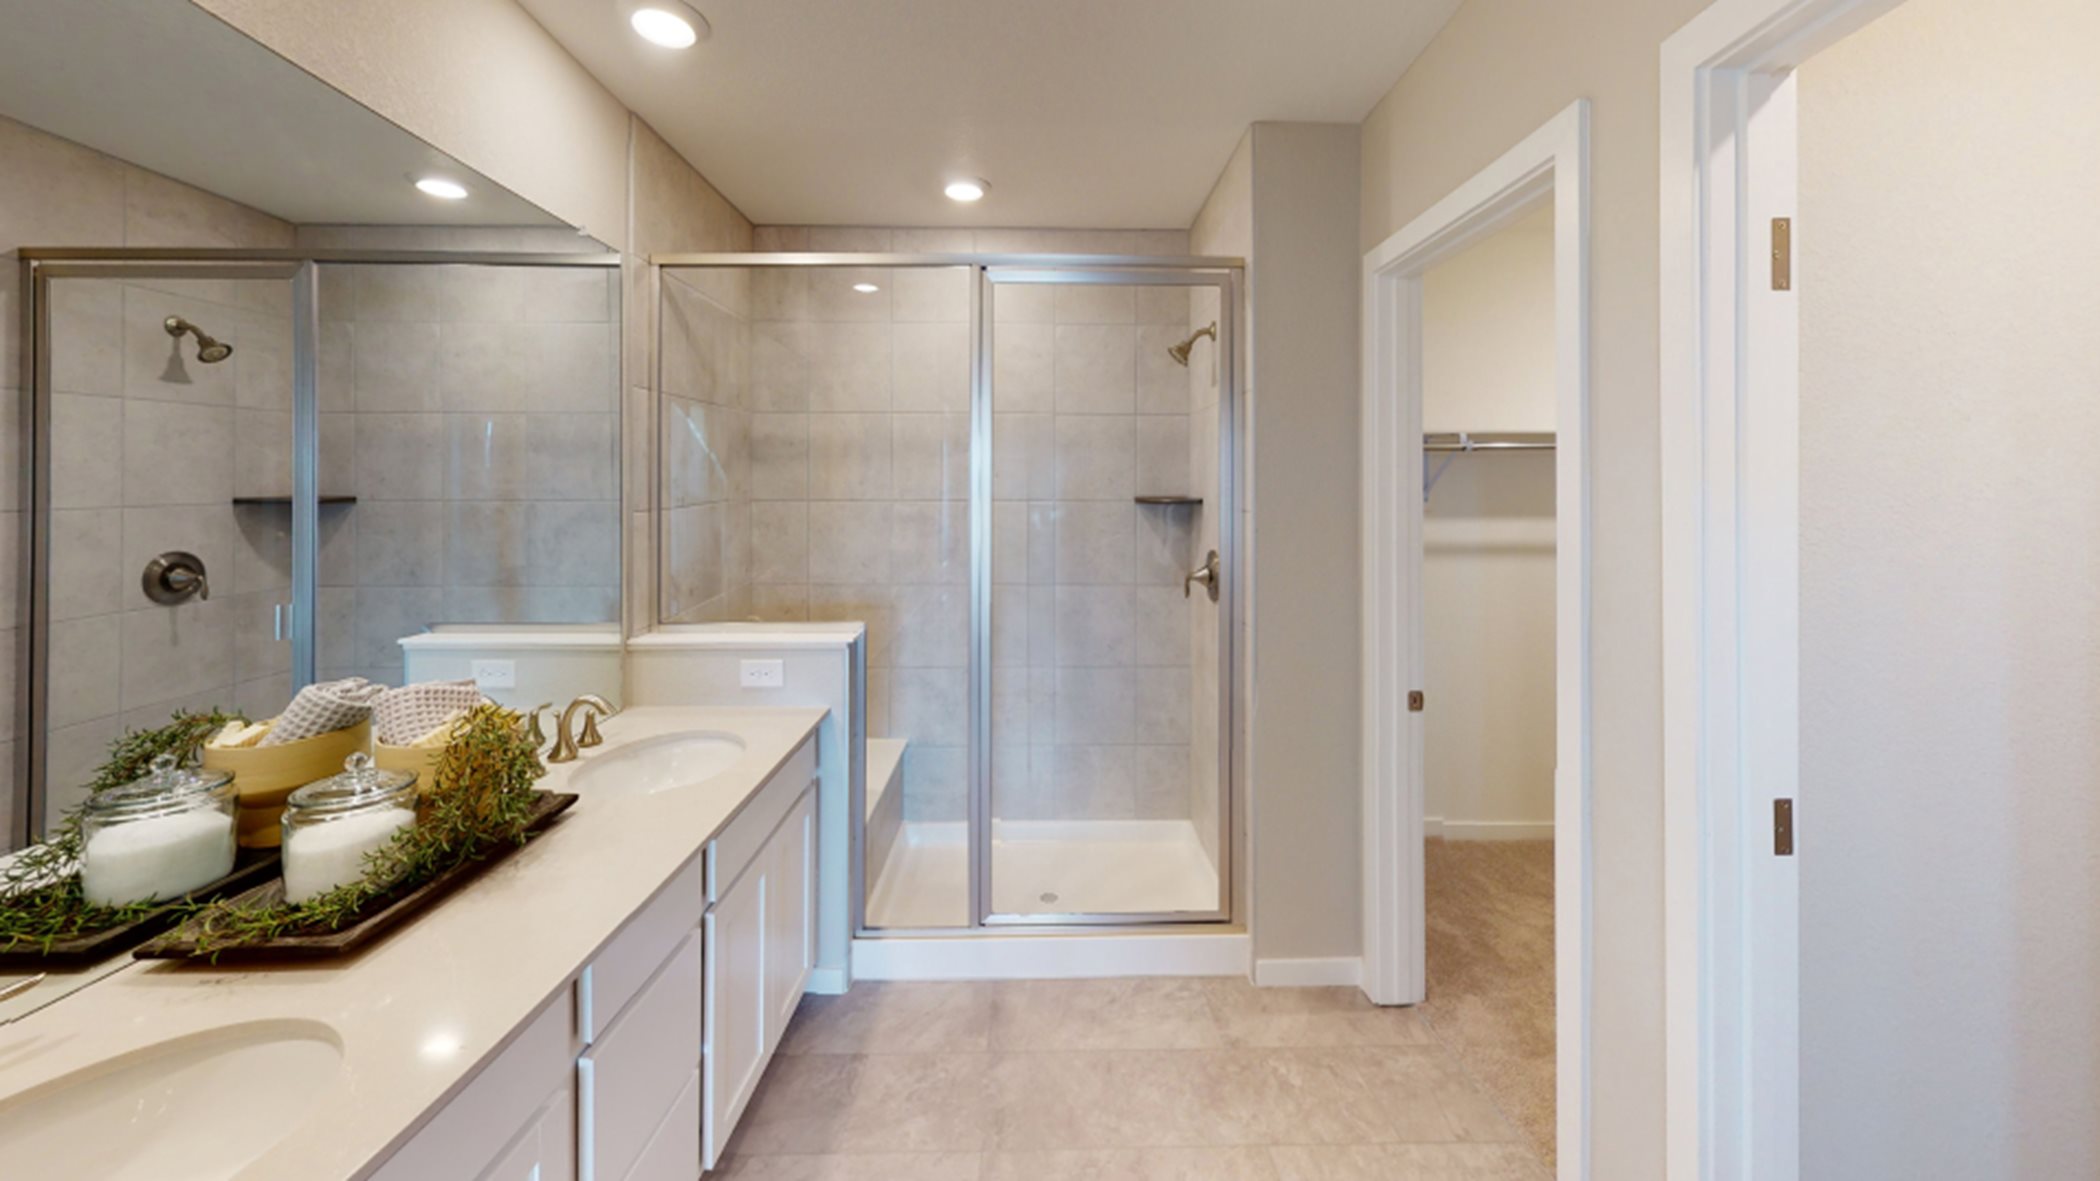 Owner's bathroom sinks, shower, and closet entrance